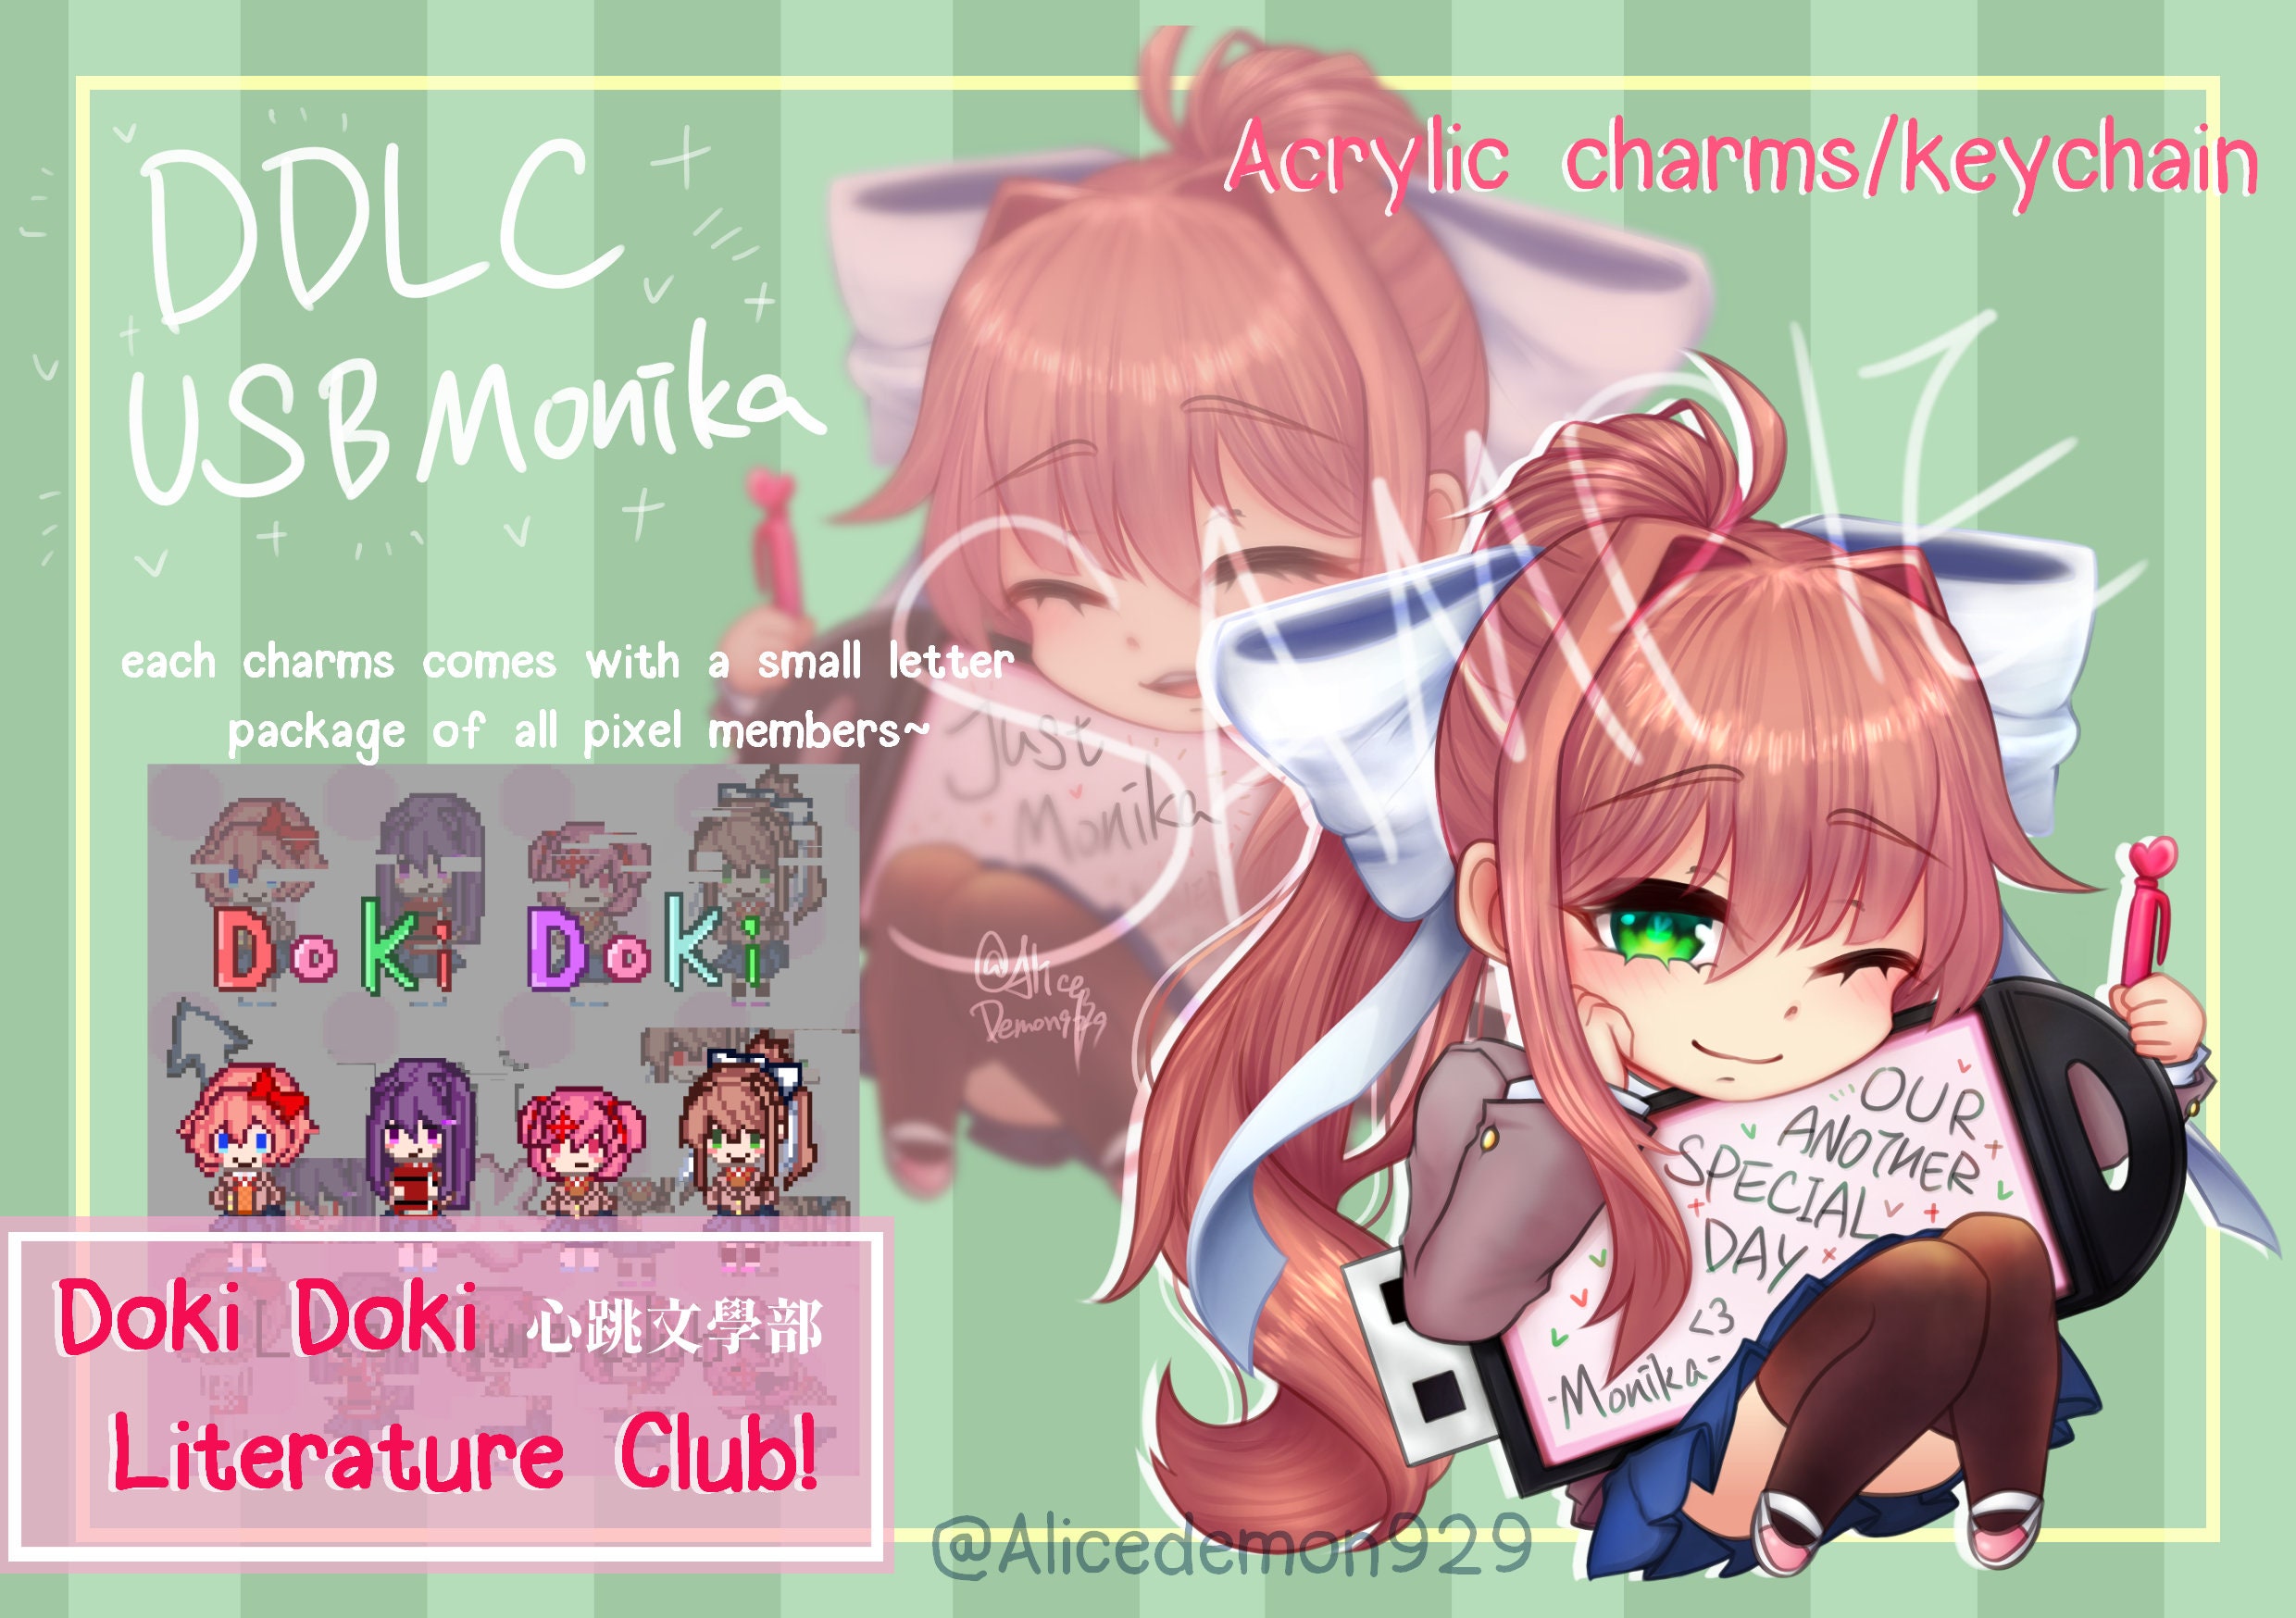 a brand new day // ddlc - Info ♡  Literature club, Literature, Anime